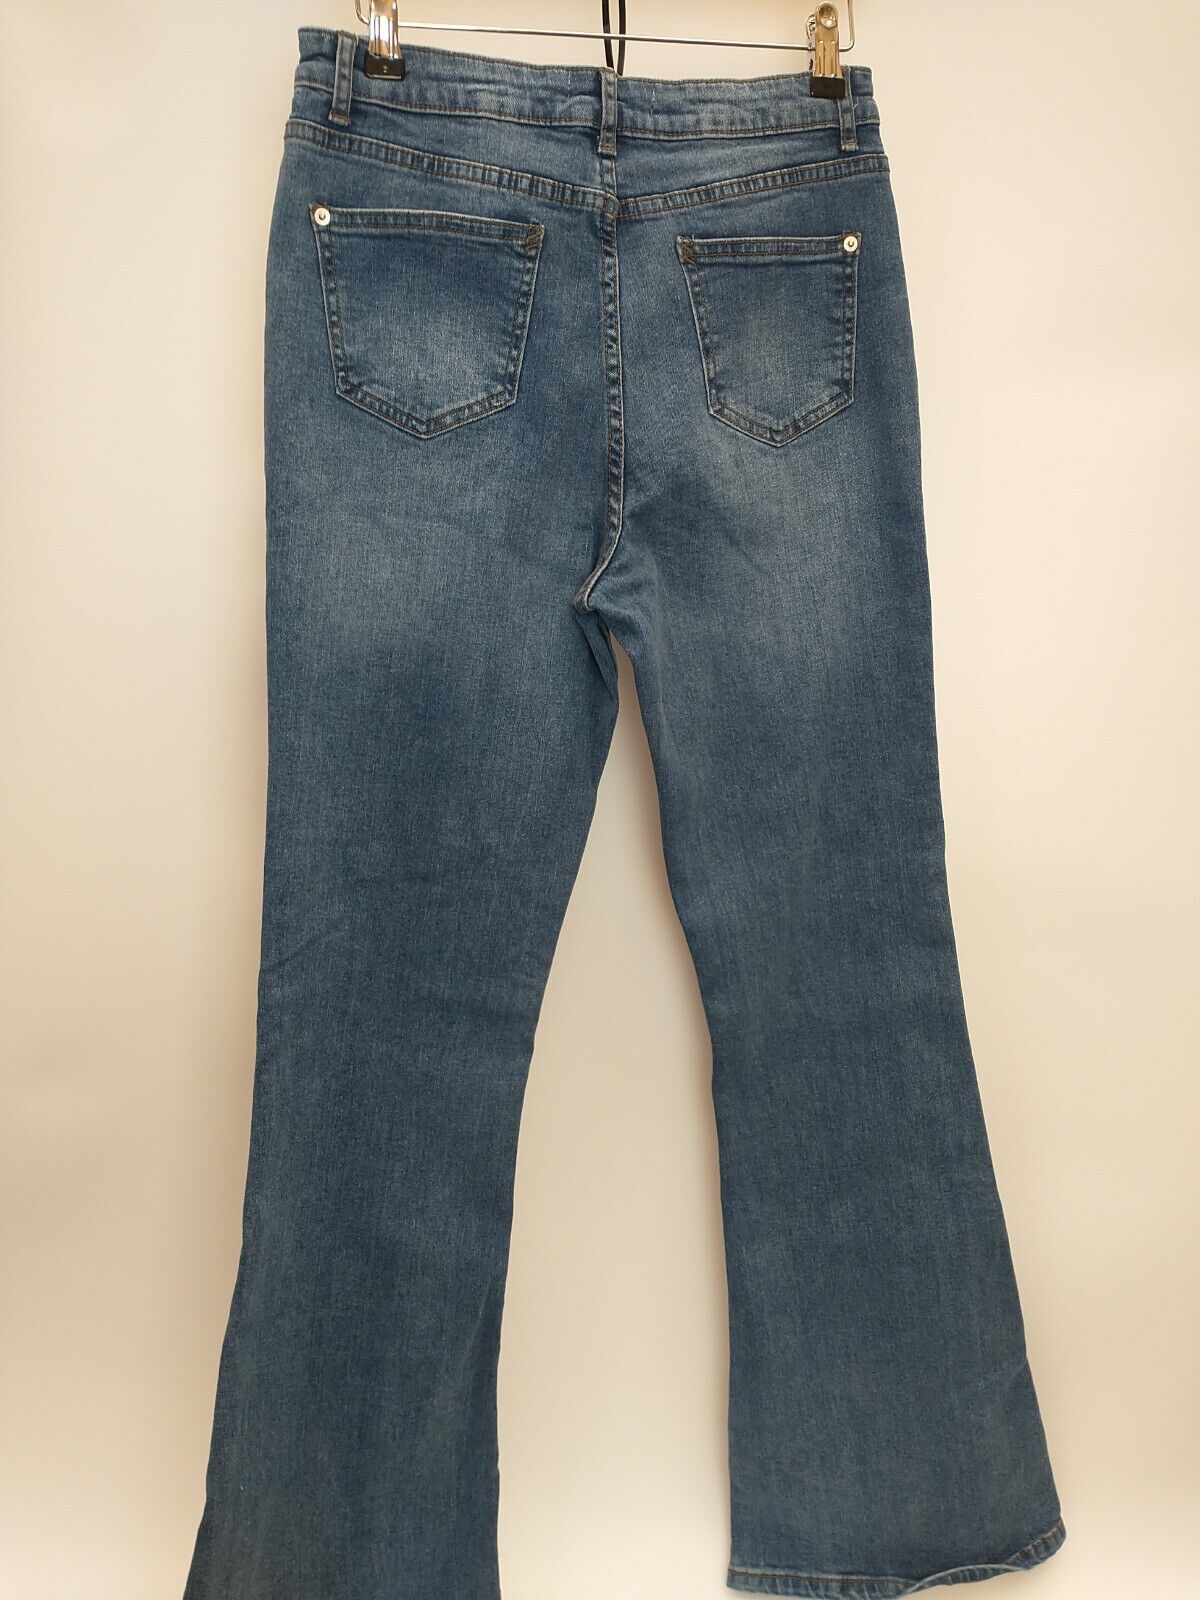 Missguided Slim Fit Flared Jeans Size UK 8 **** V215